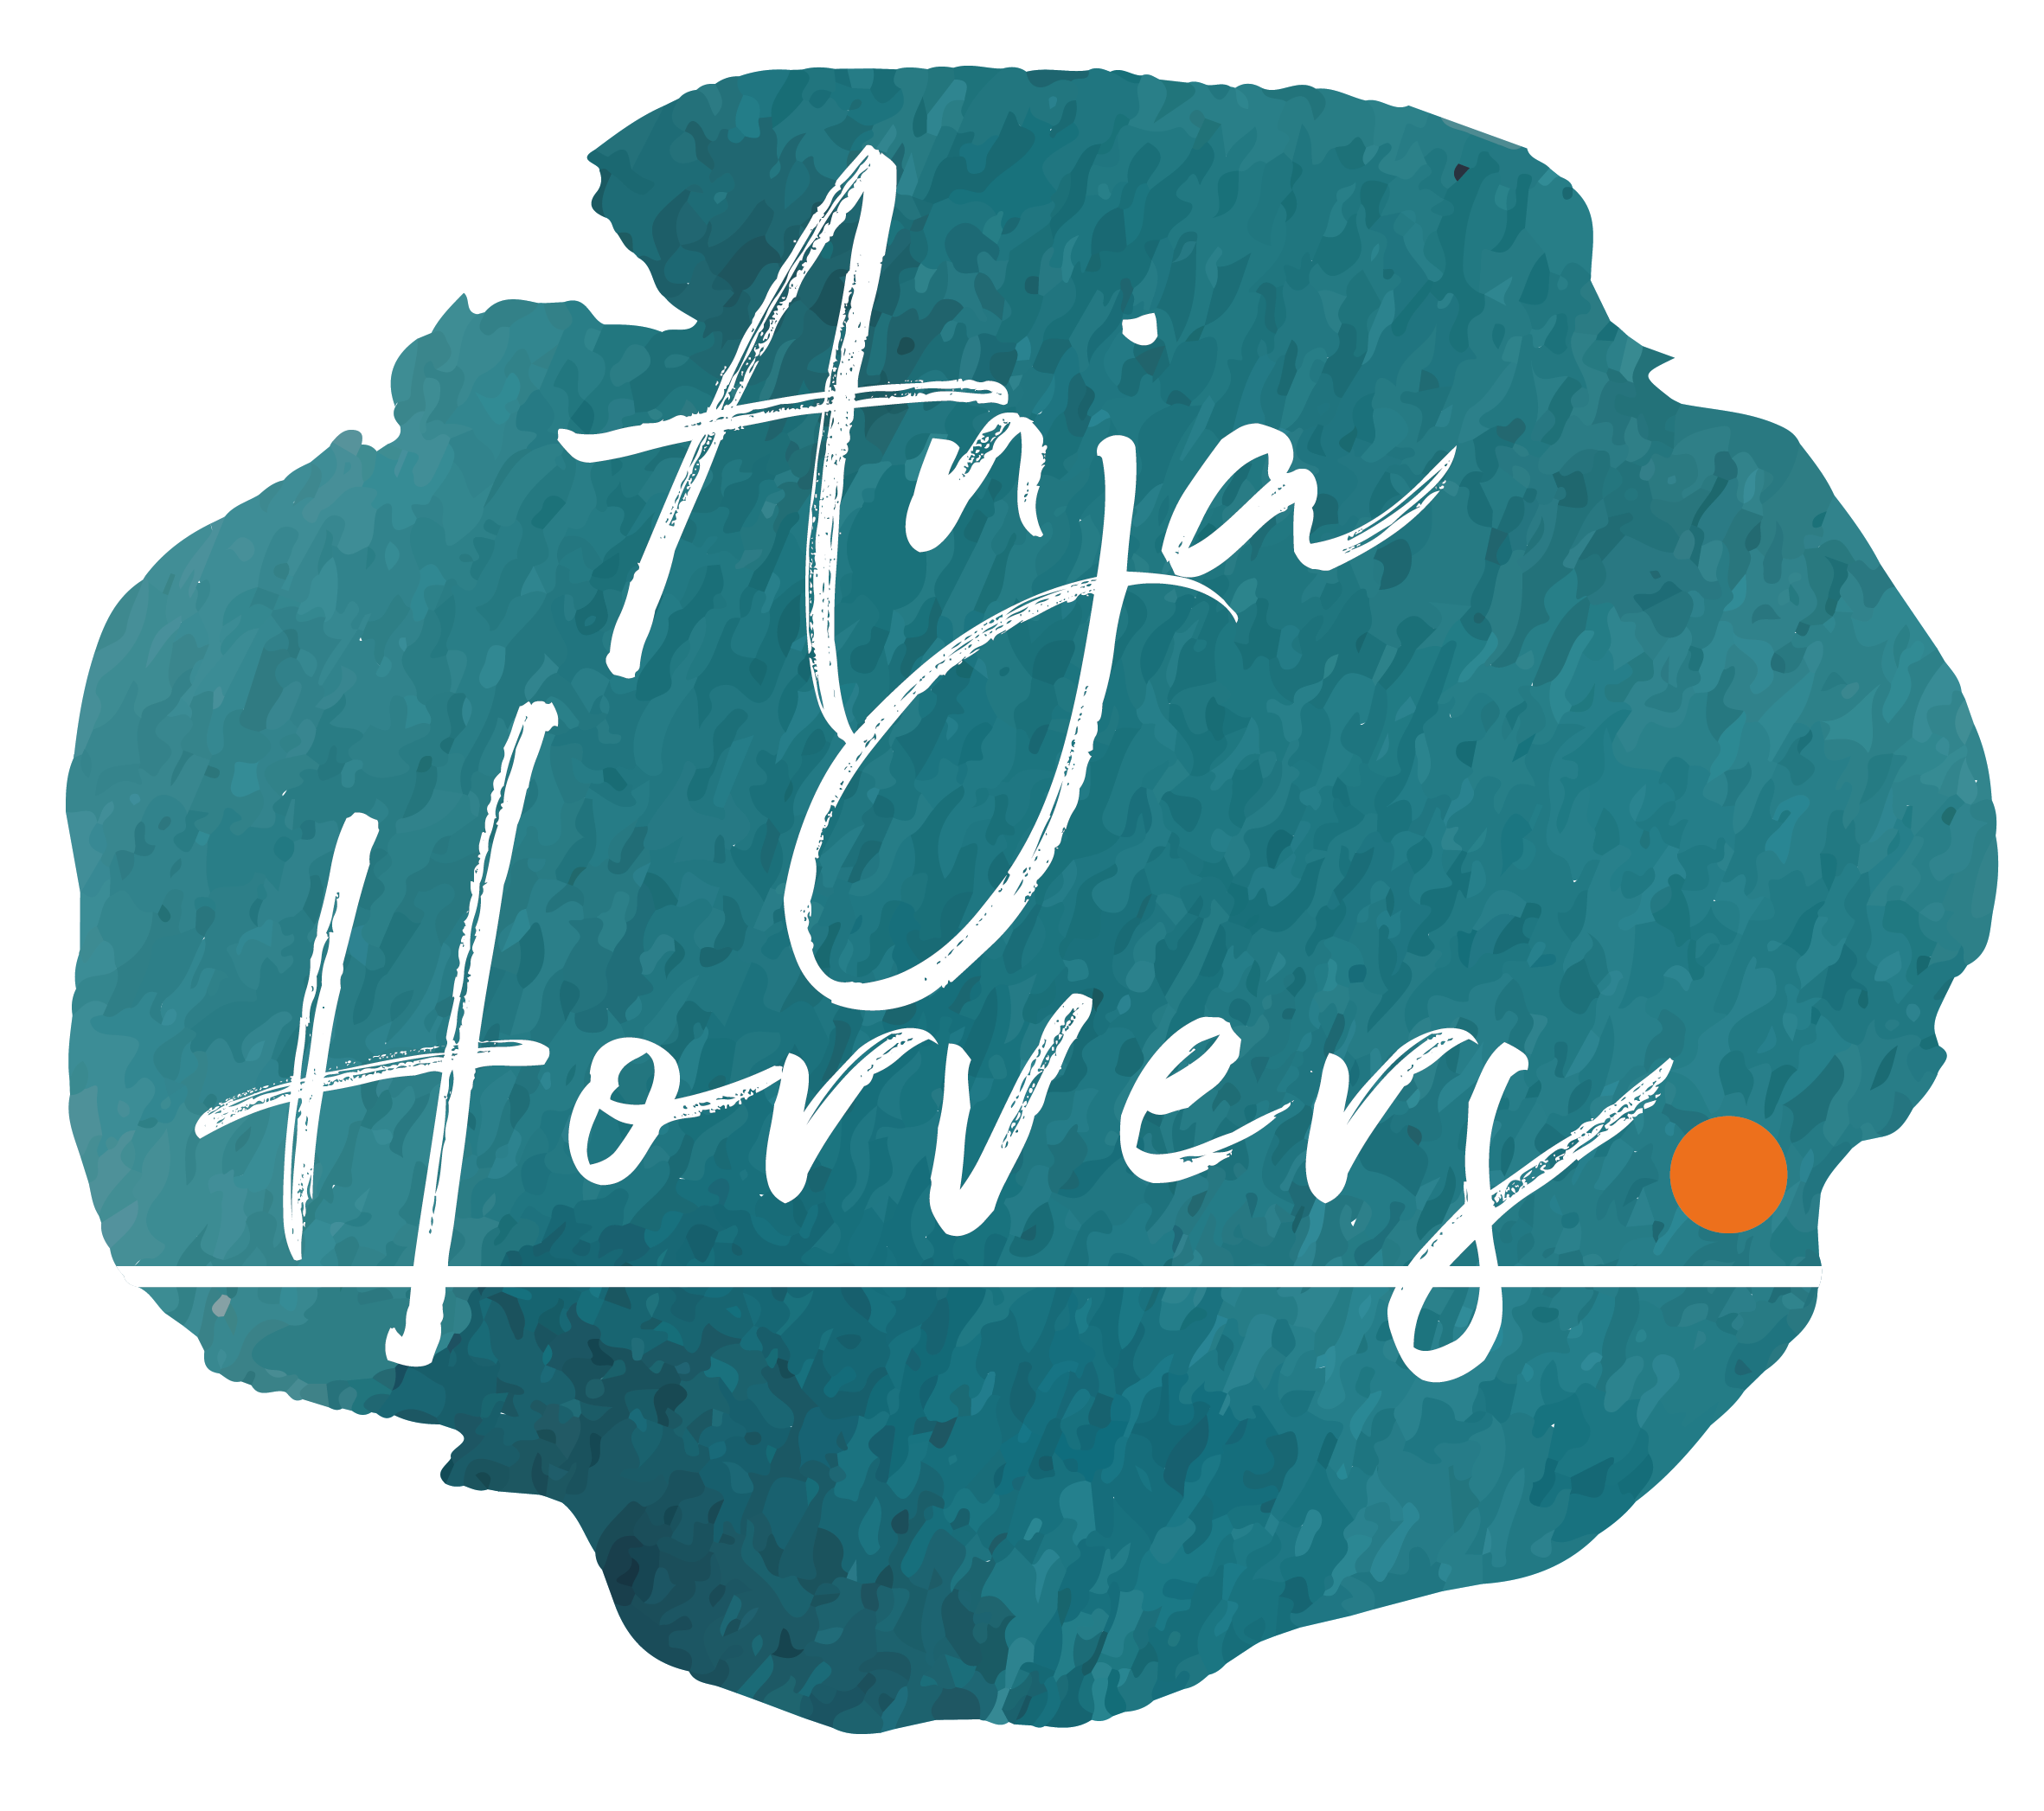 Anja Horvers